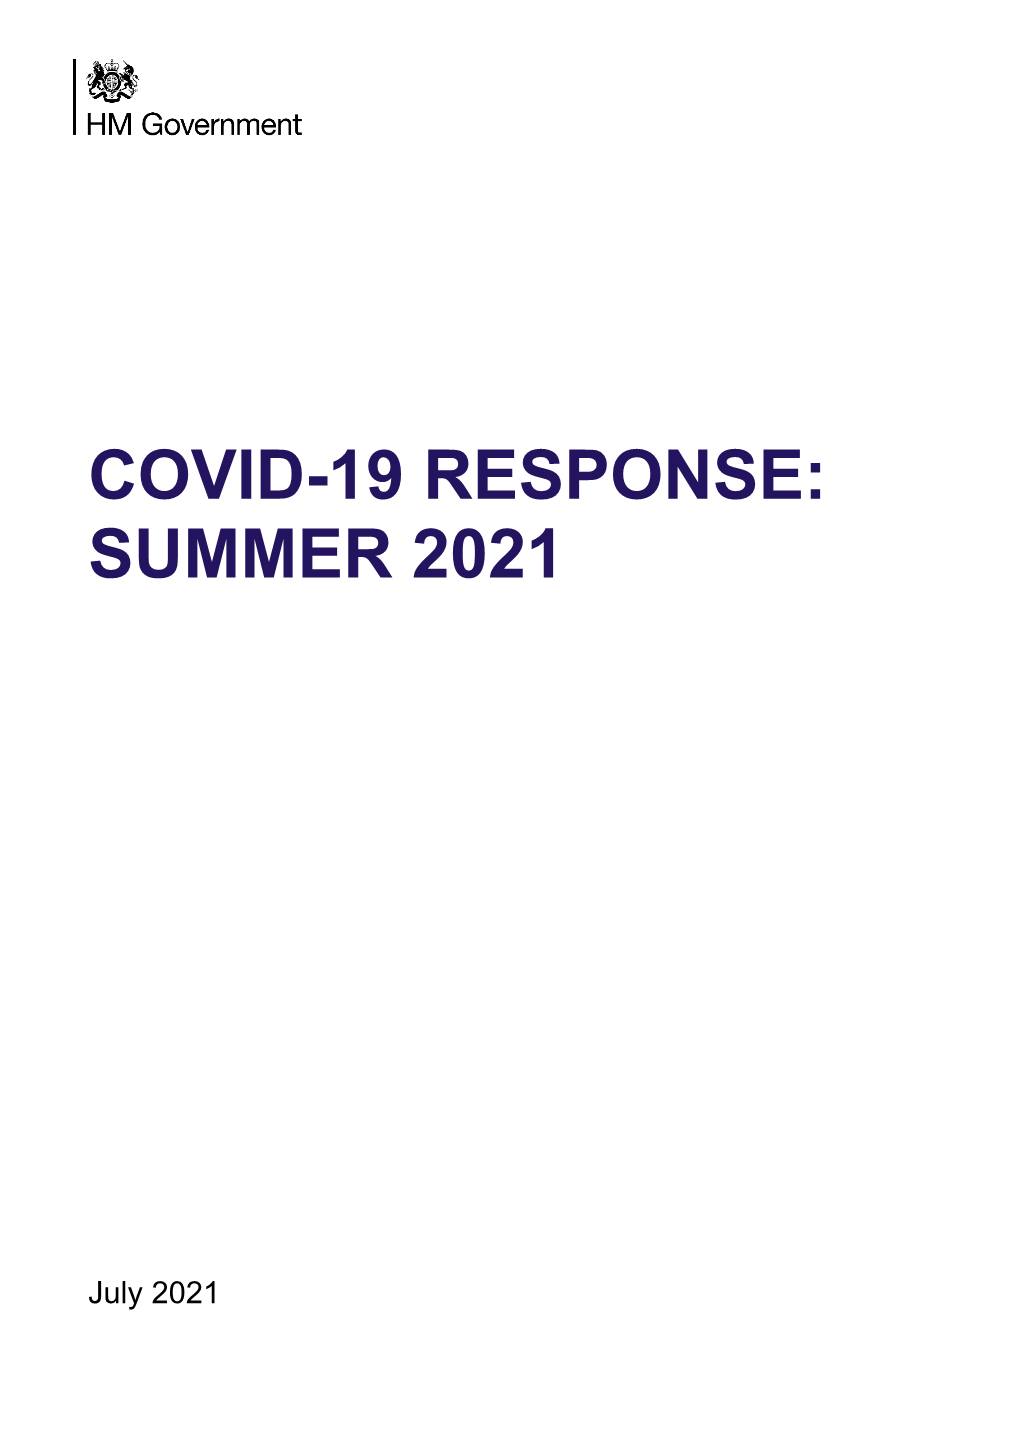 HM Government COVID-19 RESPONSE: SUMMER 2021